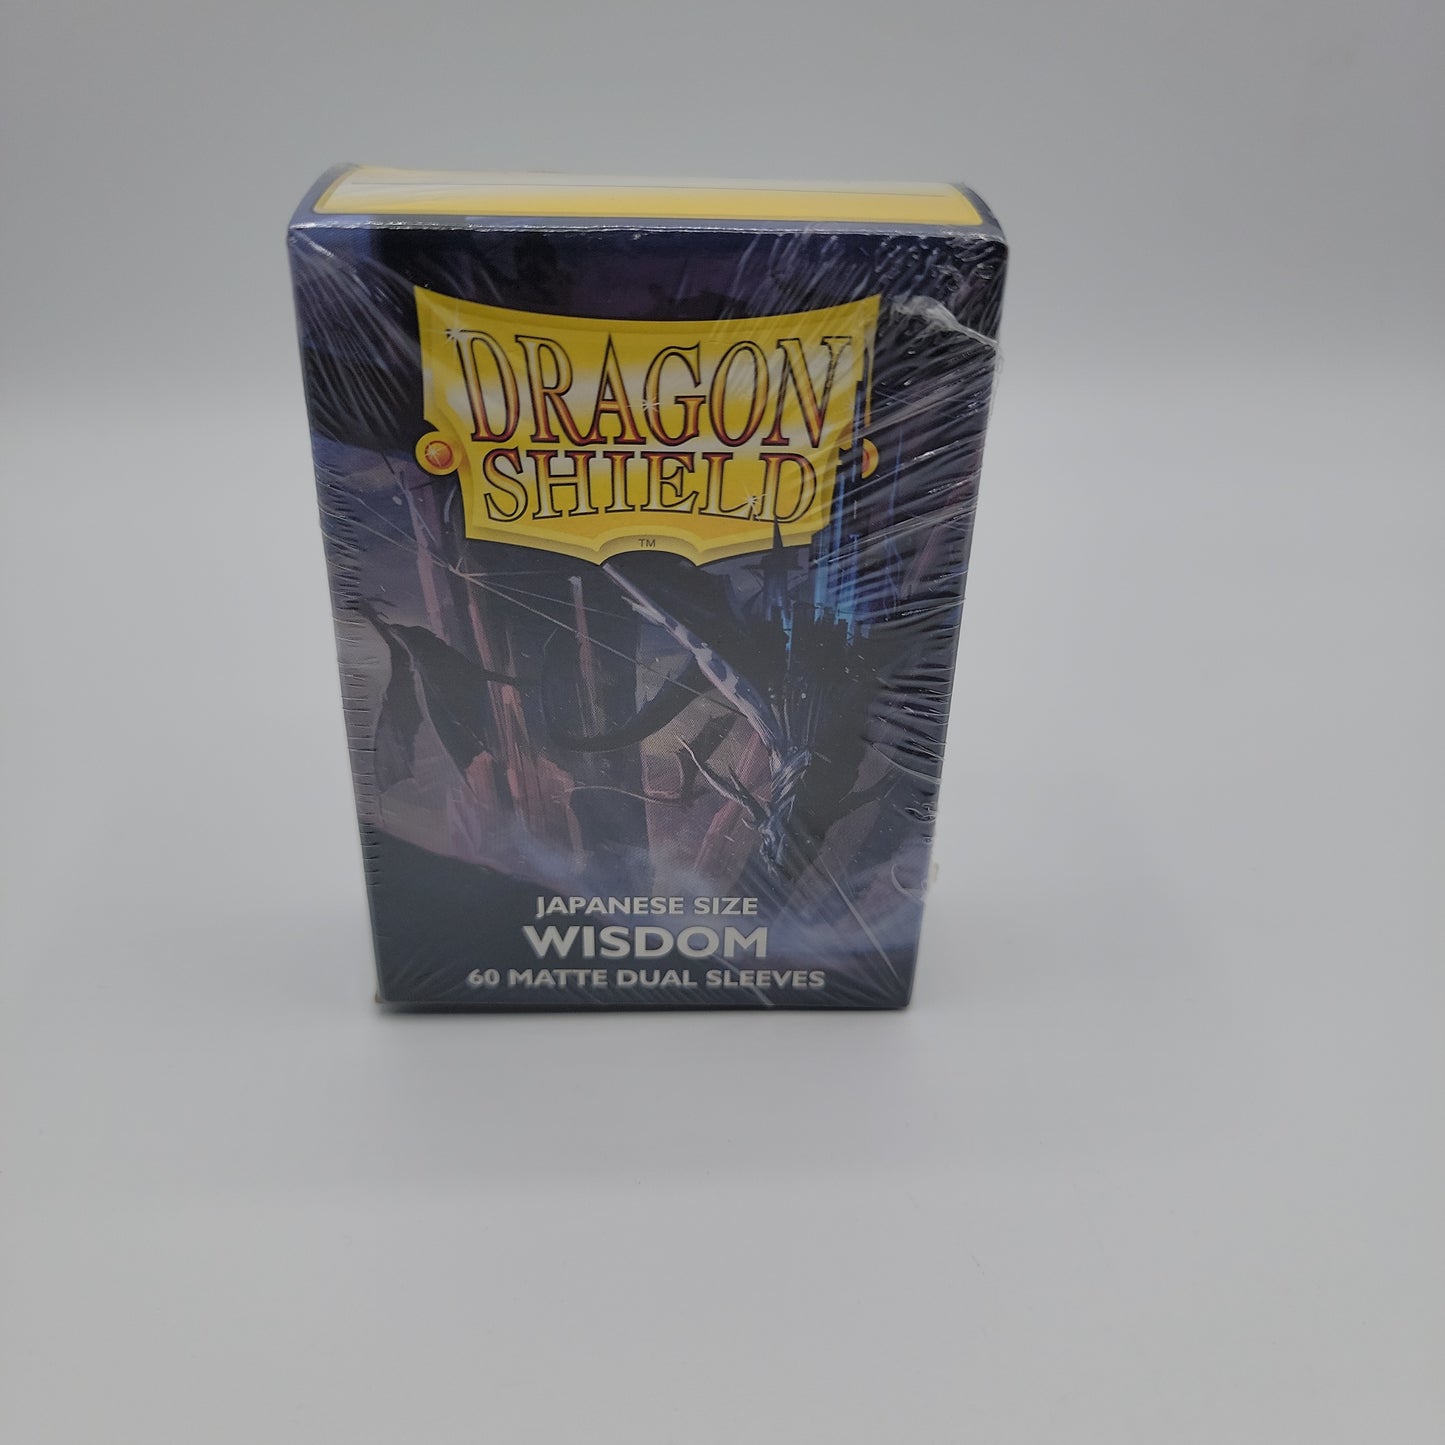 Dragon Shield - 60 Japanese Size Card Sleeves - Matte Dual Sleeves - Wisdom